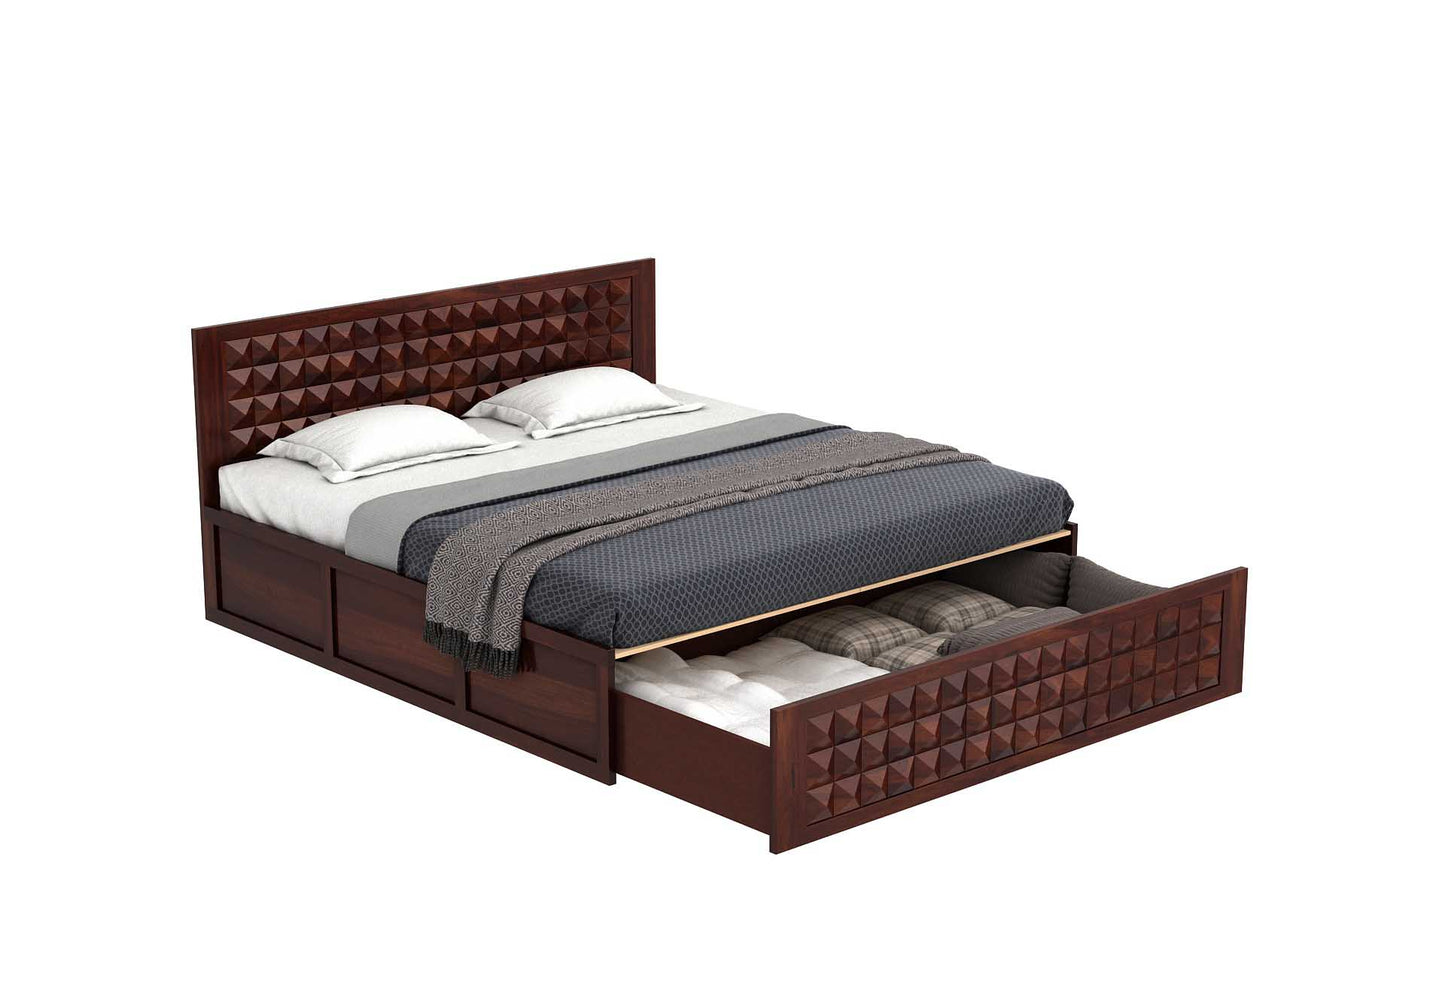 Phorma King Front Drawer Storage Bed-Walnut